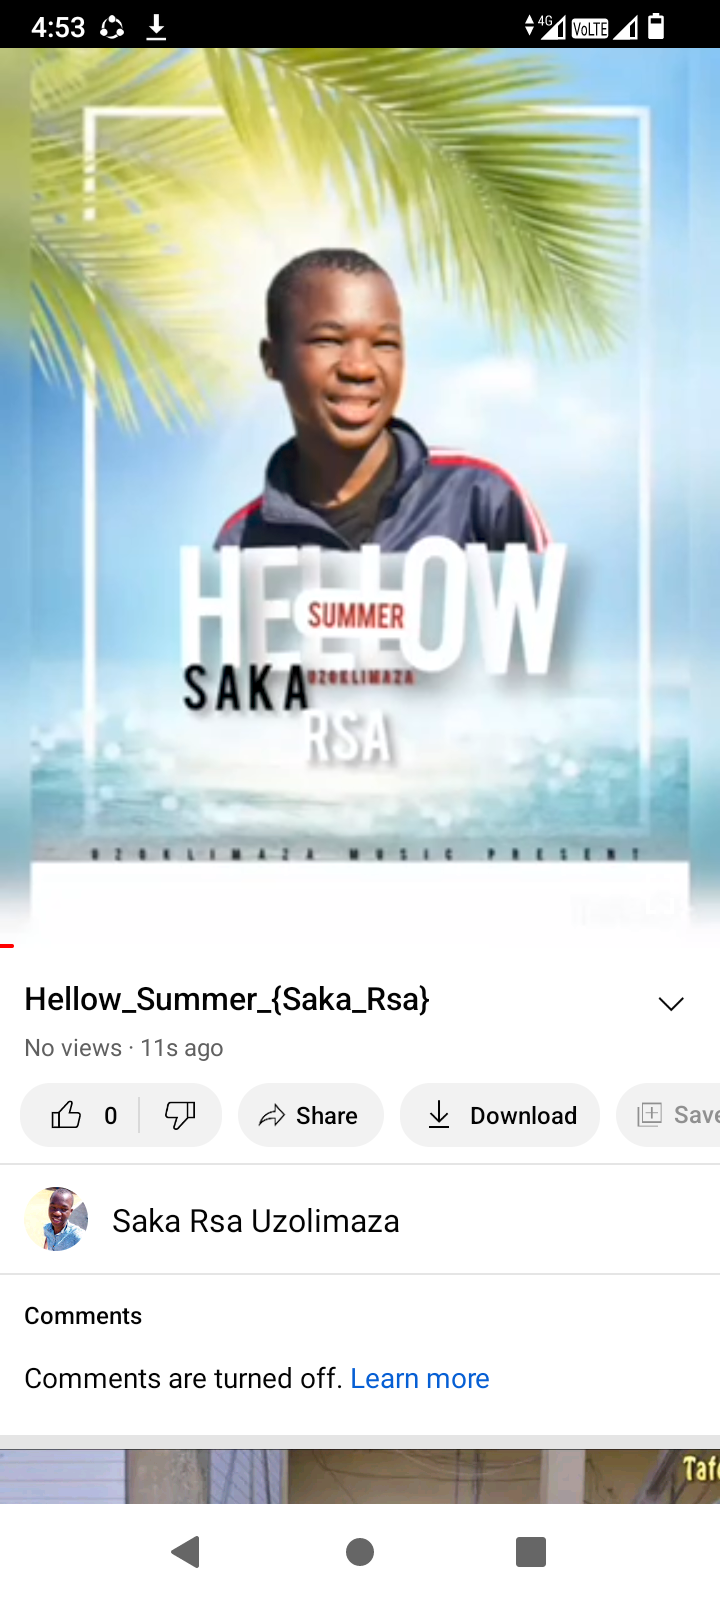 Hellow Summer - SAKA Rsa Uzolimaza